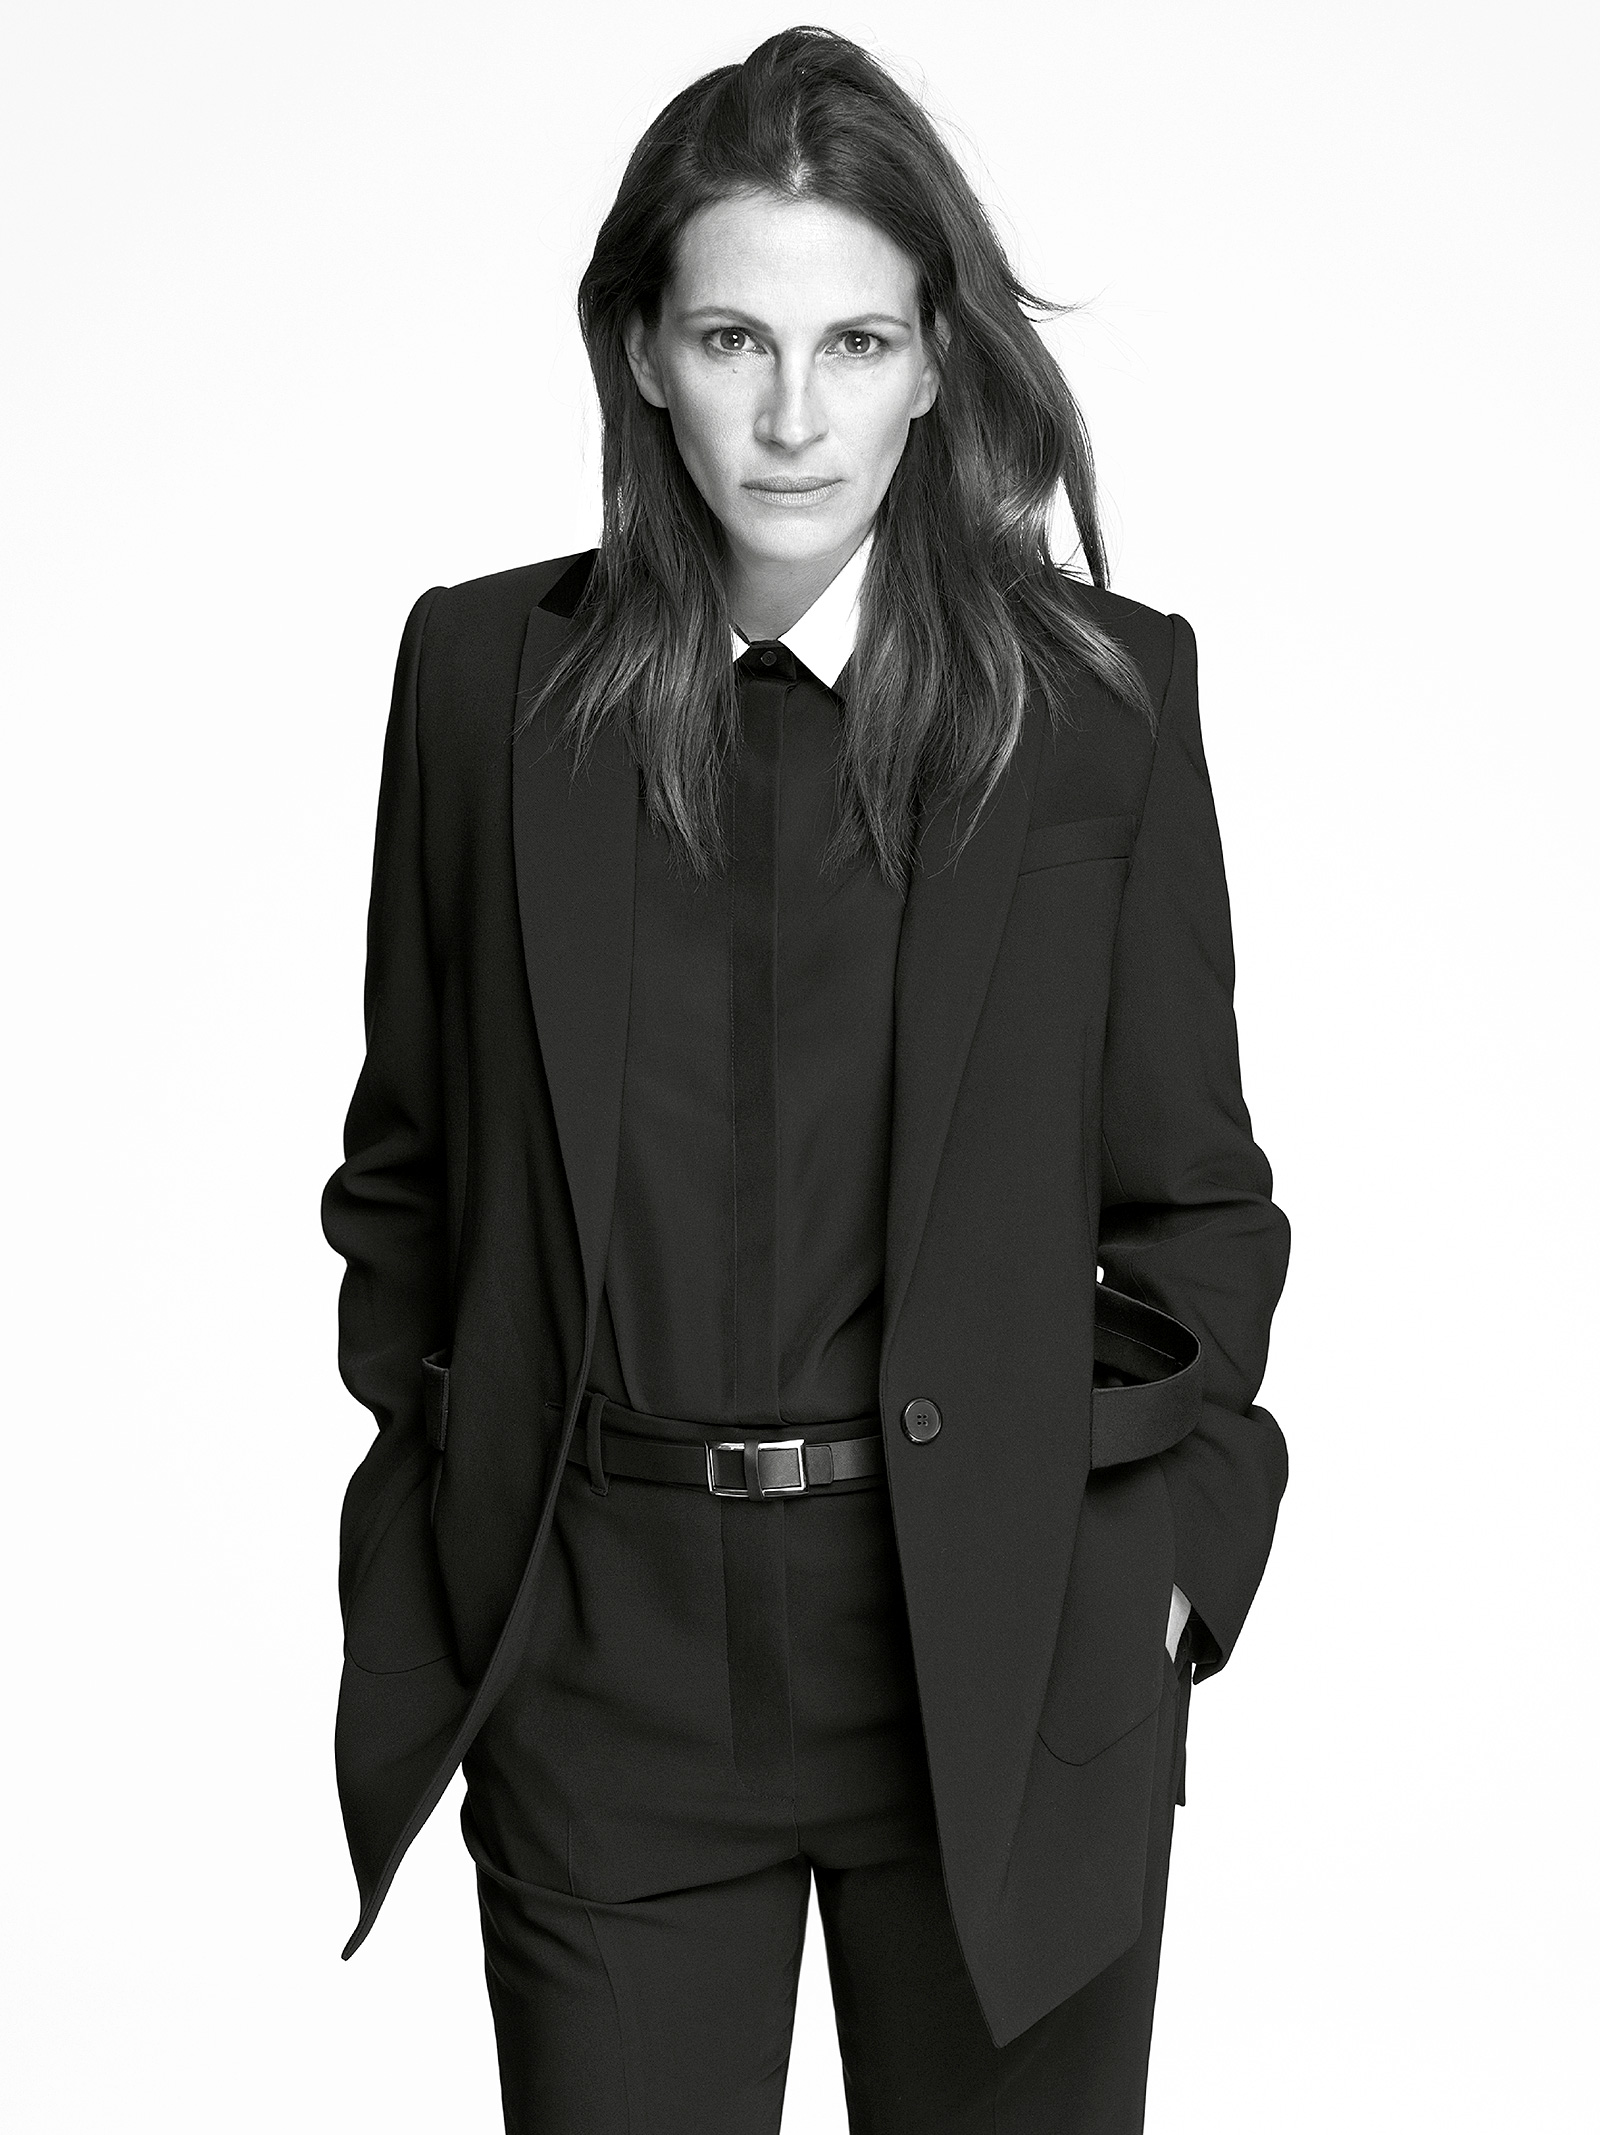 Julia Roberts, Riccardo Tisci, Givenchy, Spring/Summer 15 Campaign, Fashion Icon, Hollywood Icon